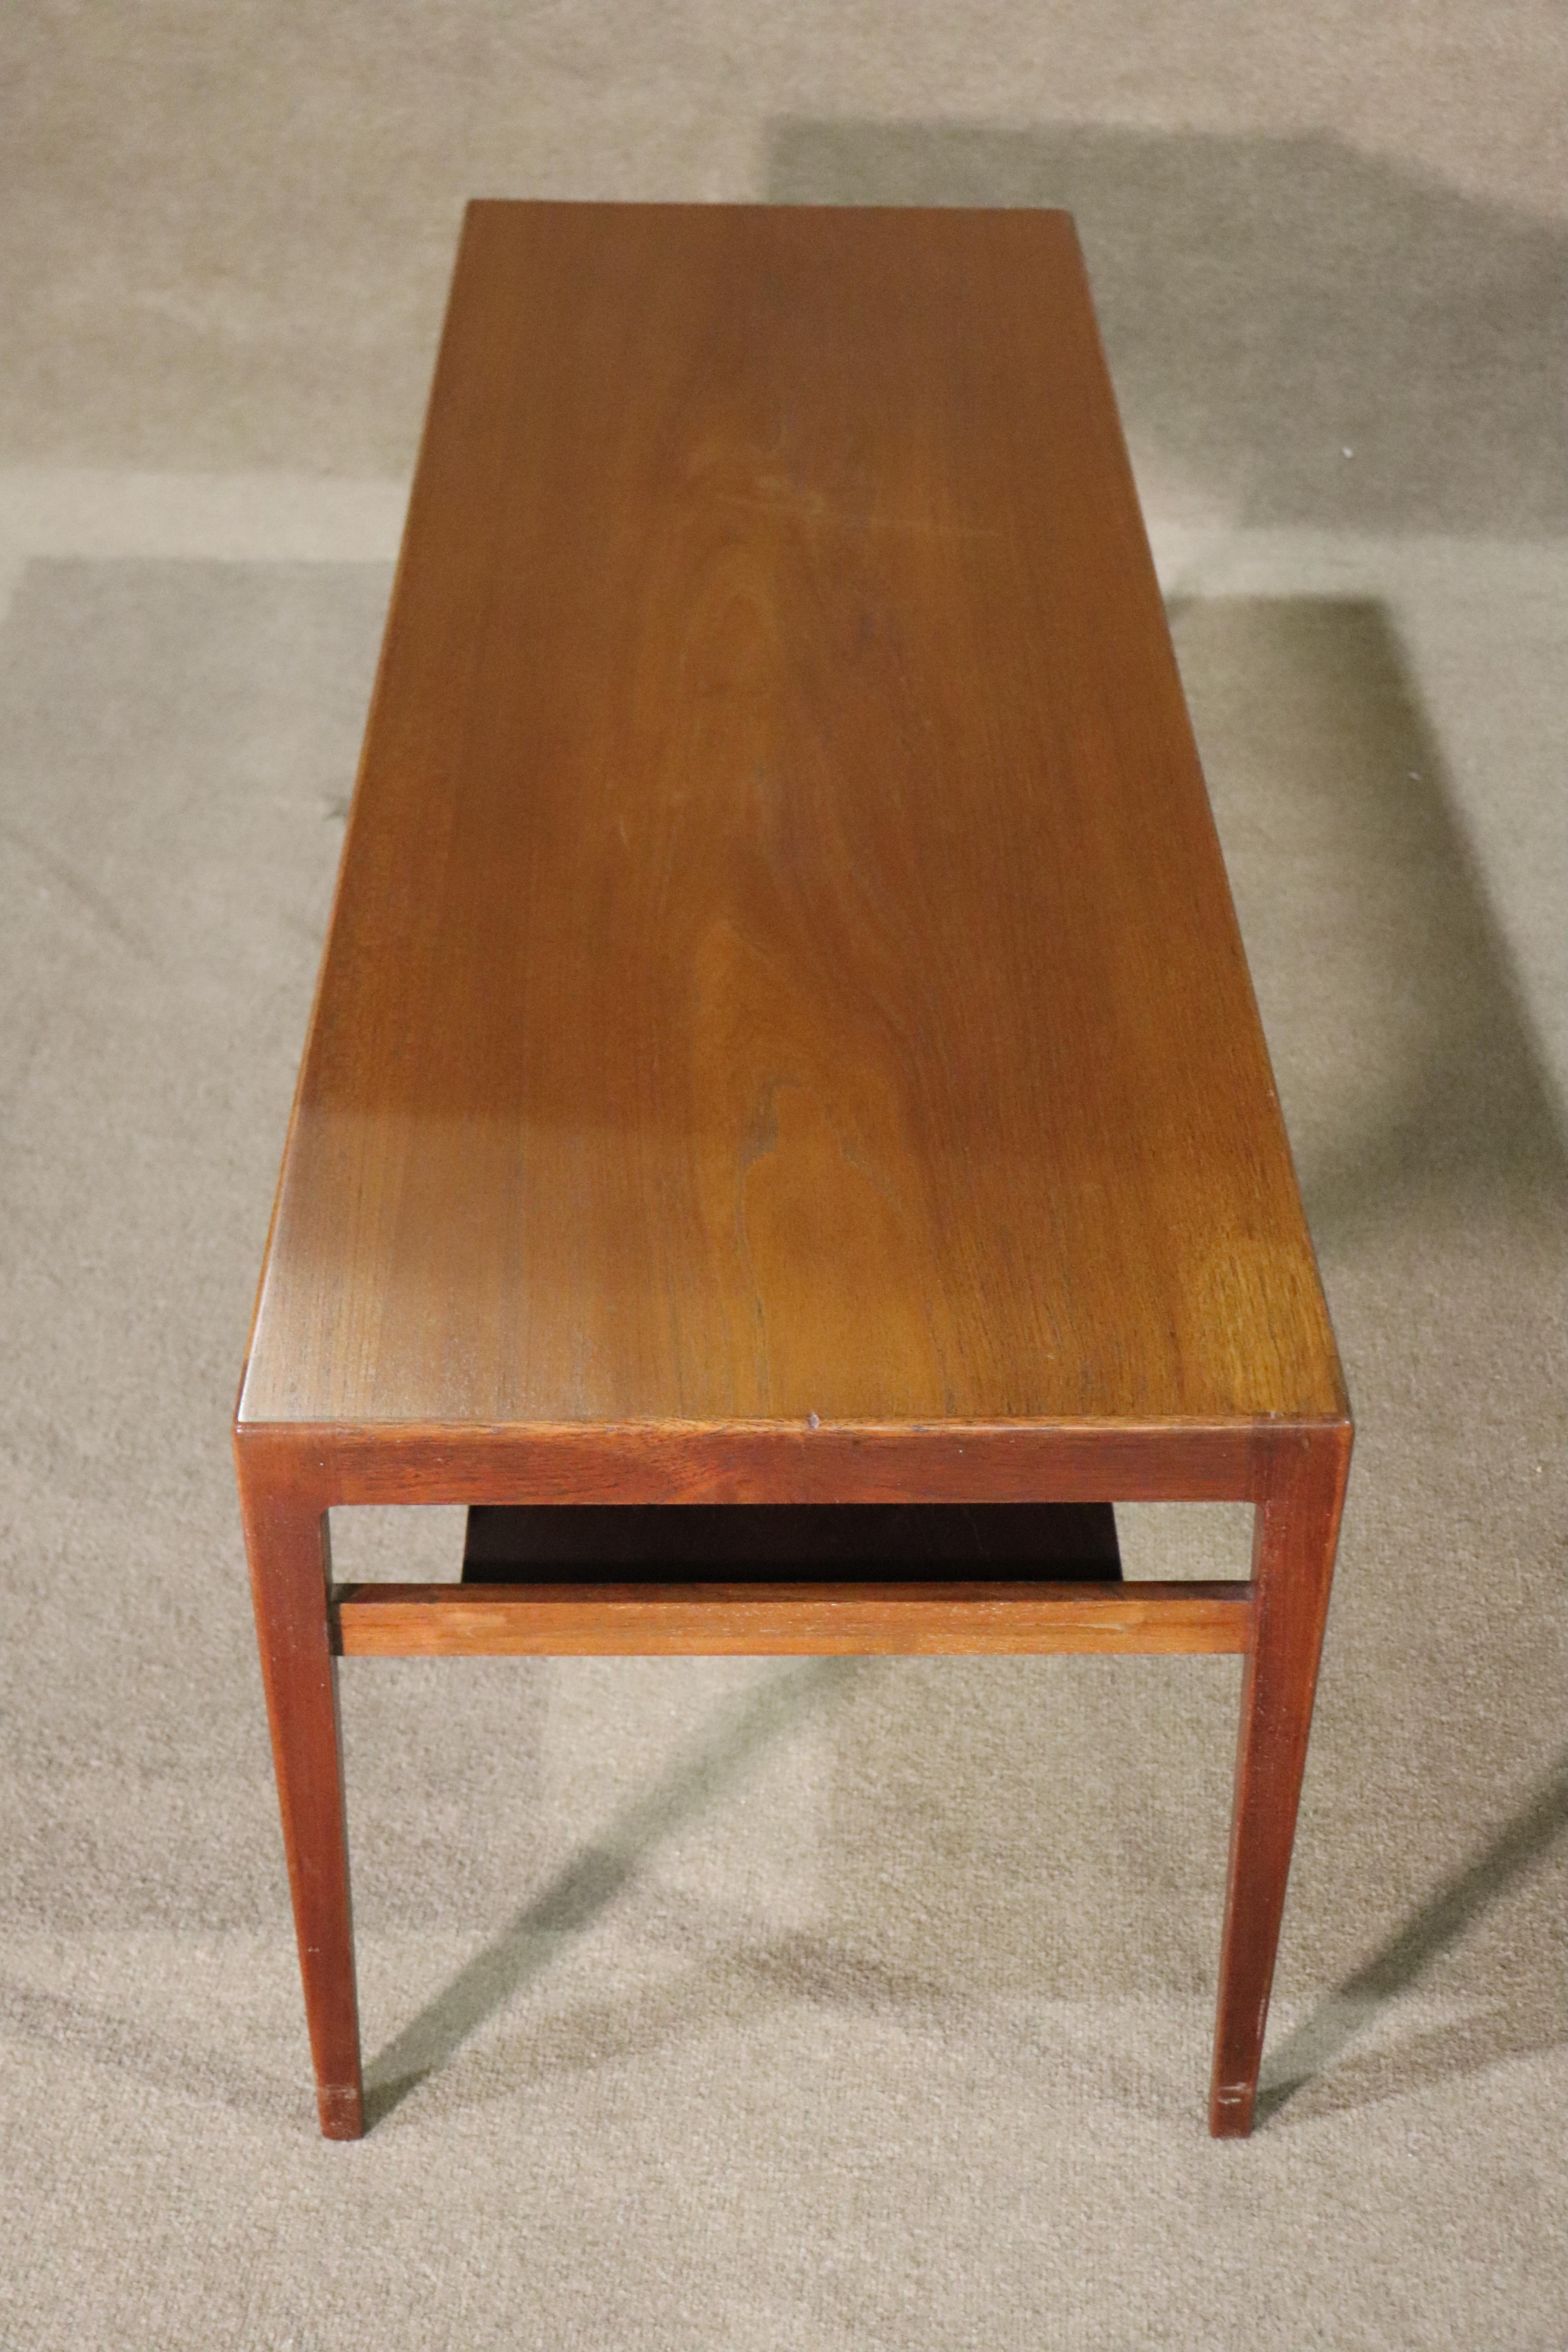 Mid-century modern Danish made coffee table. Teak grain, hidden shelf and tapered legs.
Please confirm location NY or NJ